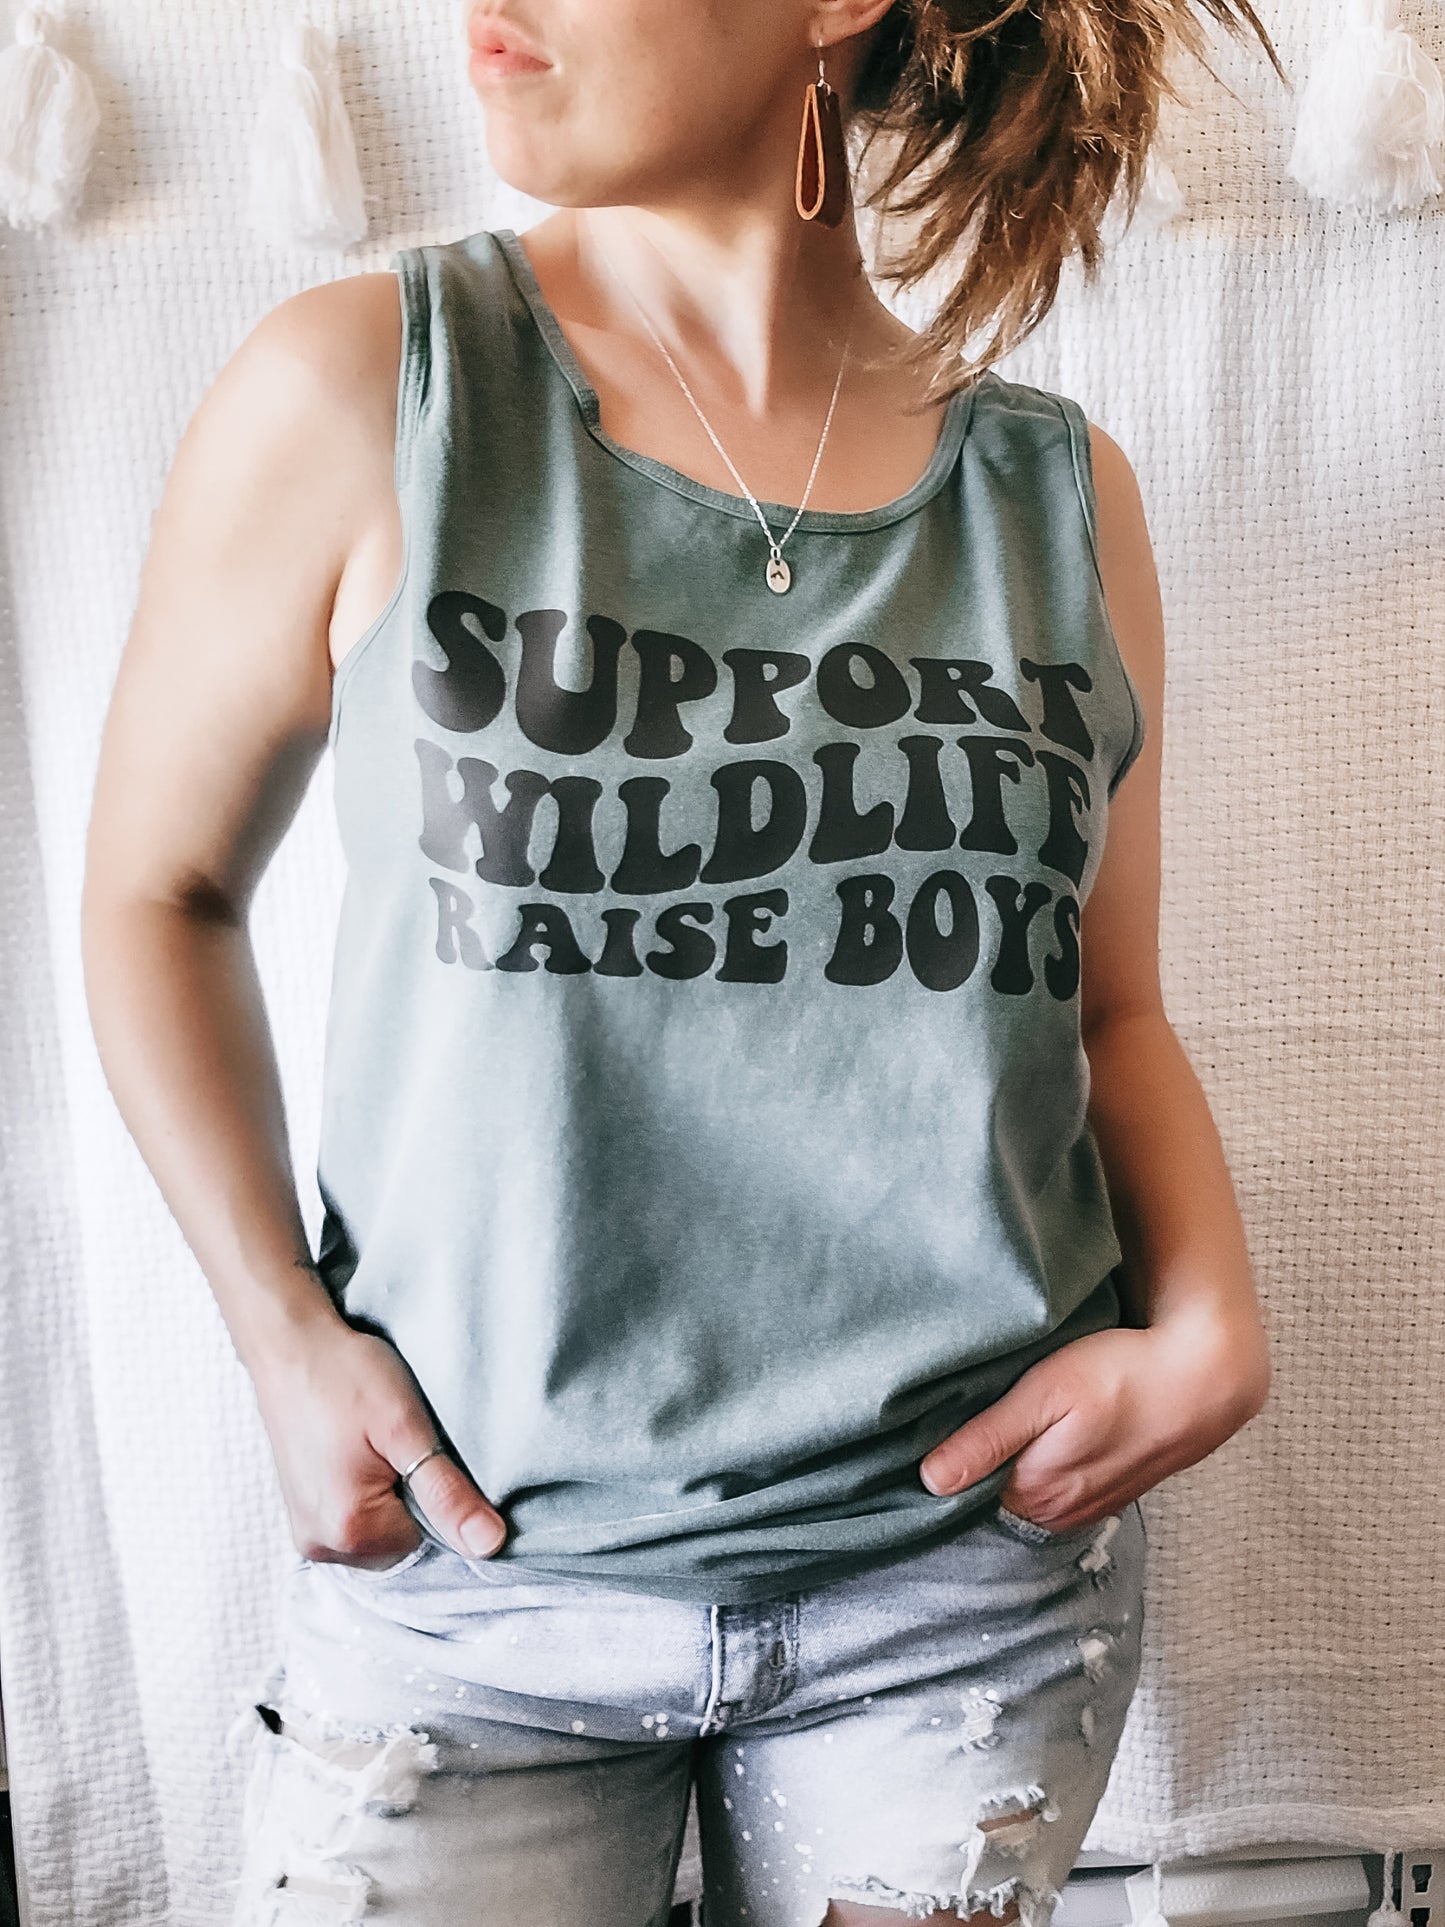 Support Wildlife - Raise Boys (tank green)